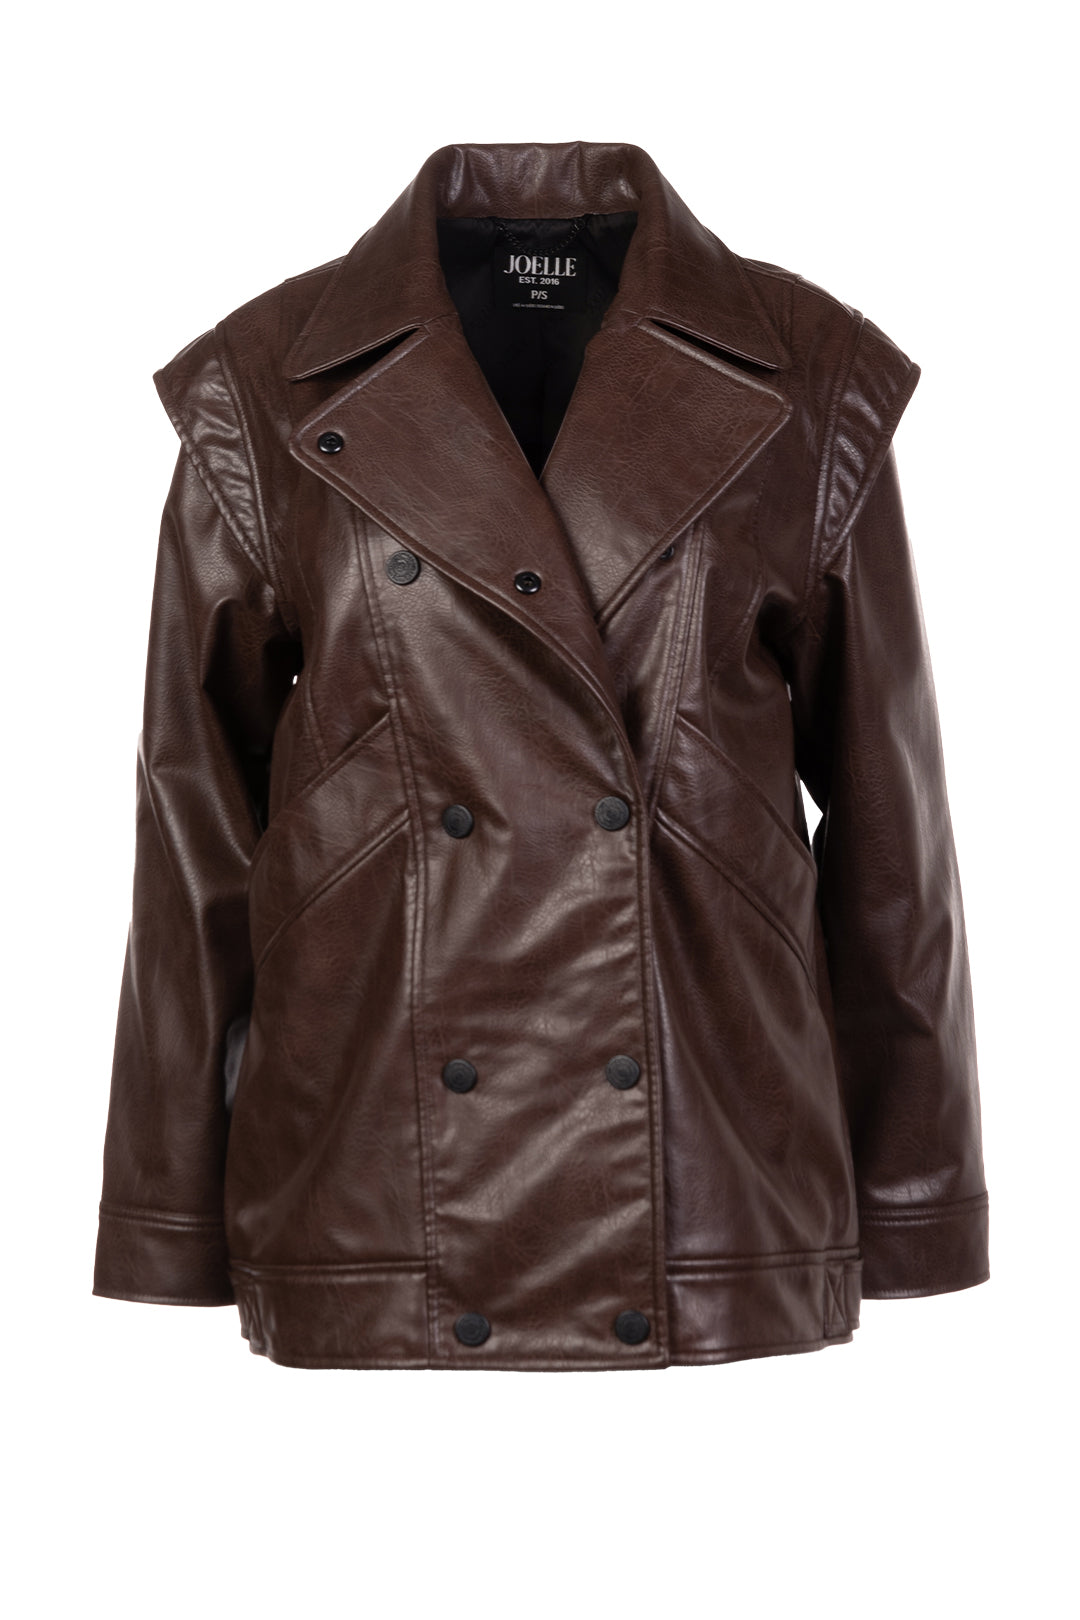 Manteau marron faux cuir style aviateur | Leonie